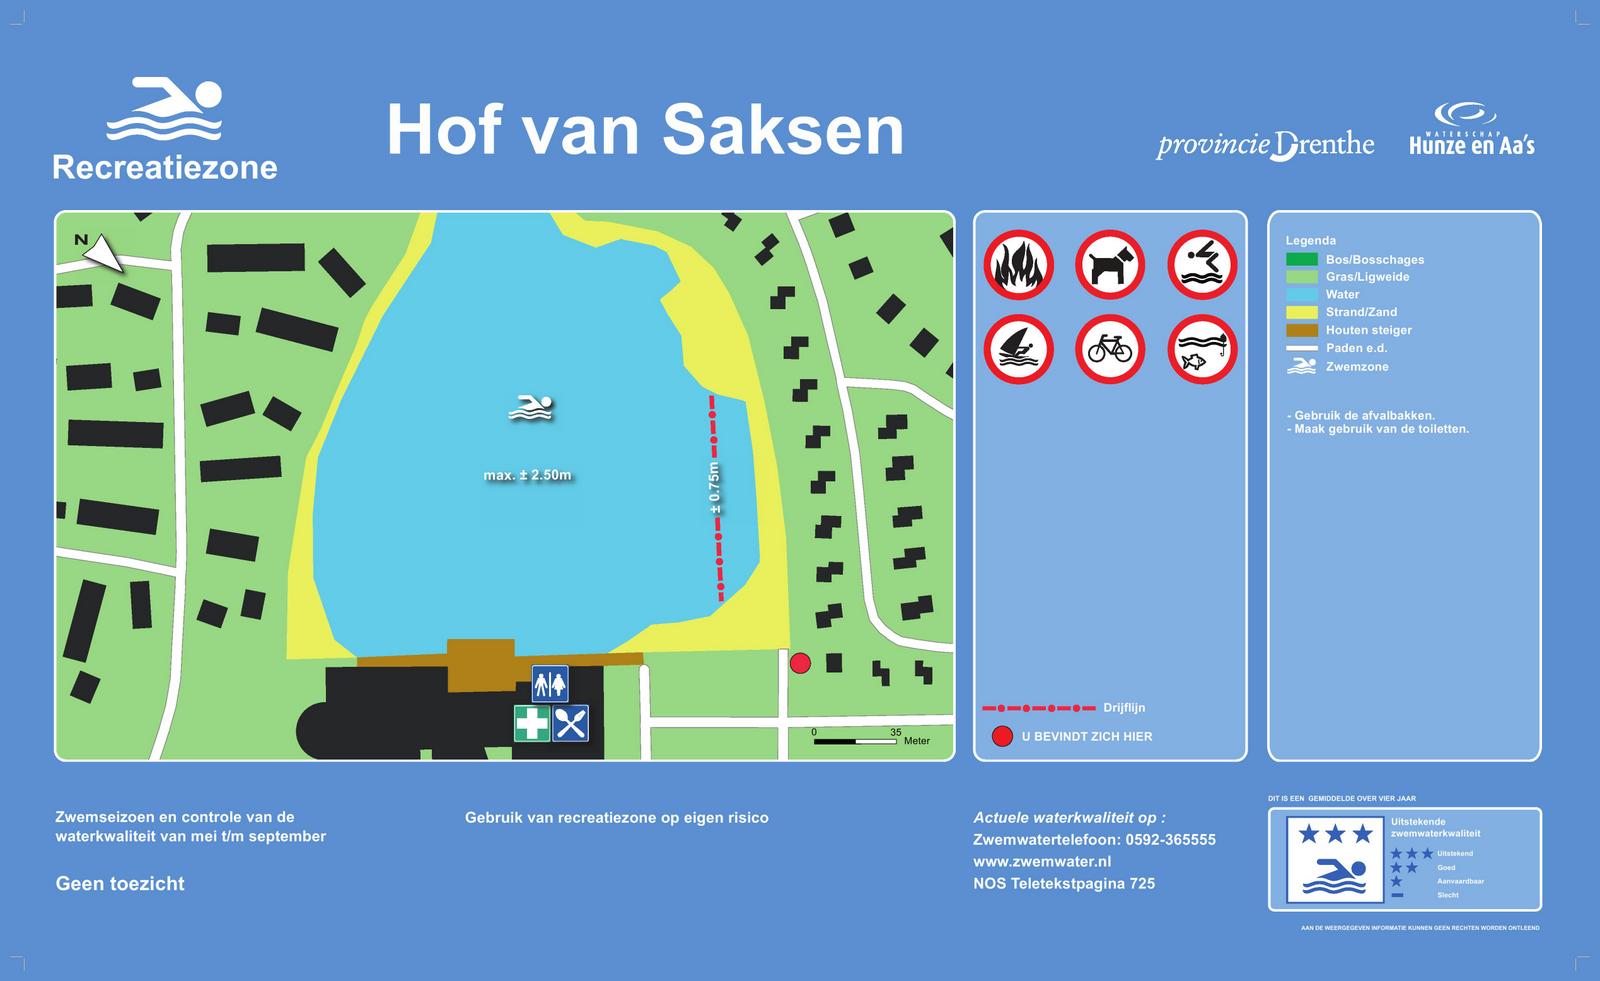 The information board at the swimming location Hof van Saksen